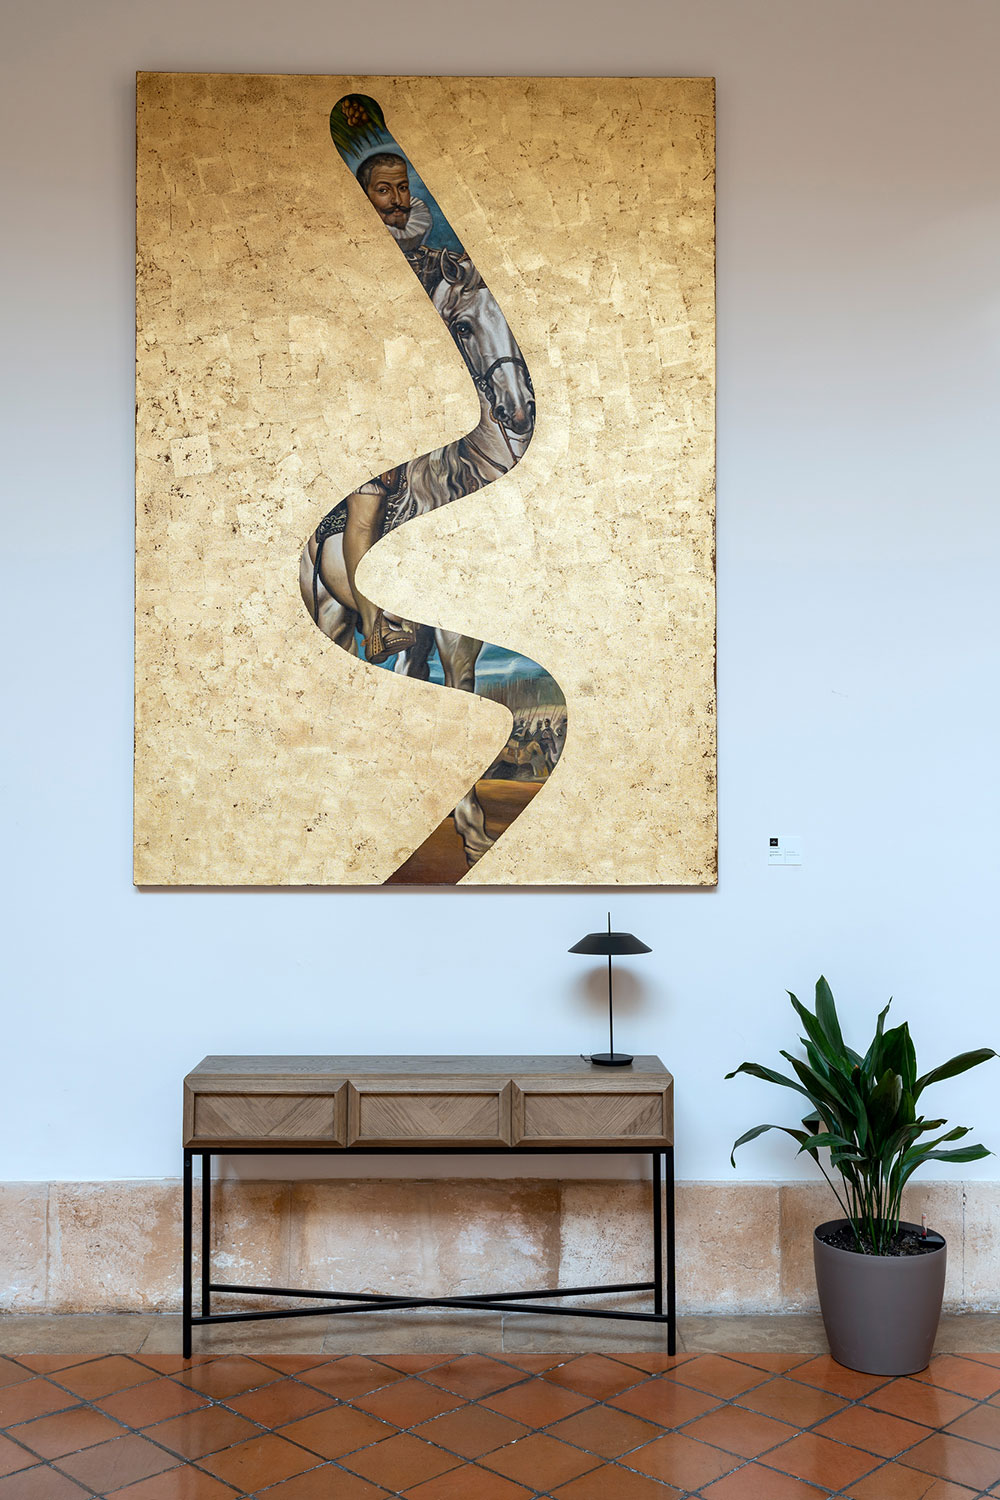 Óleo y pan de oro sobre lienzo de Lino Lago. Serie Fake Abstract